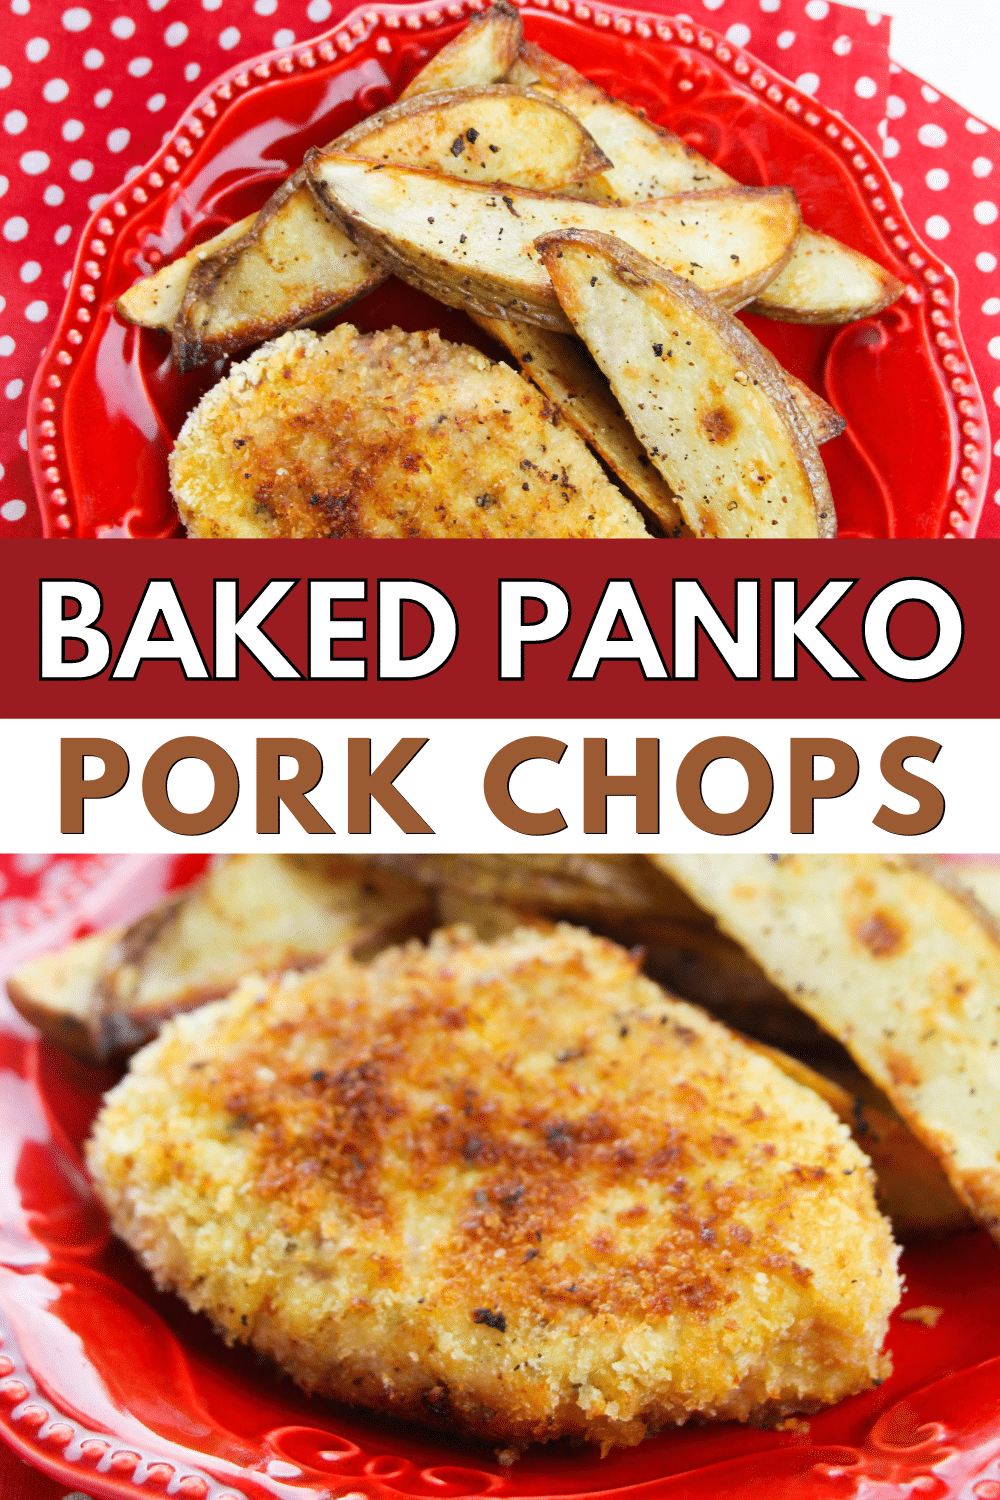 Baked panko pork chops on a plate.